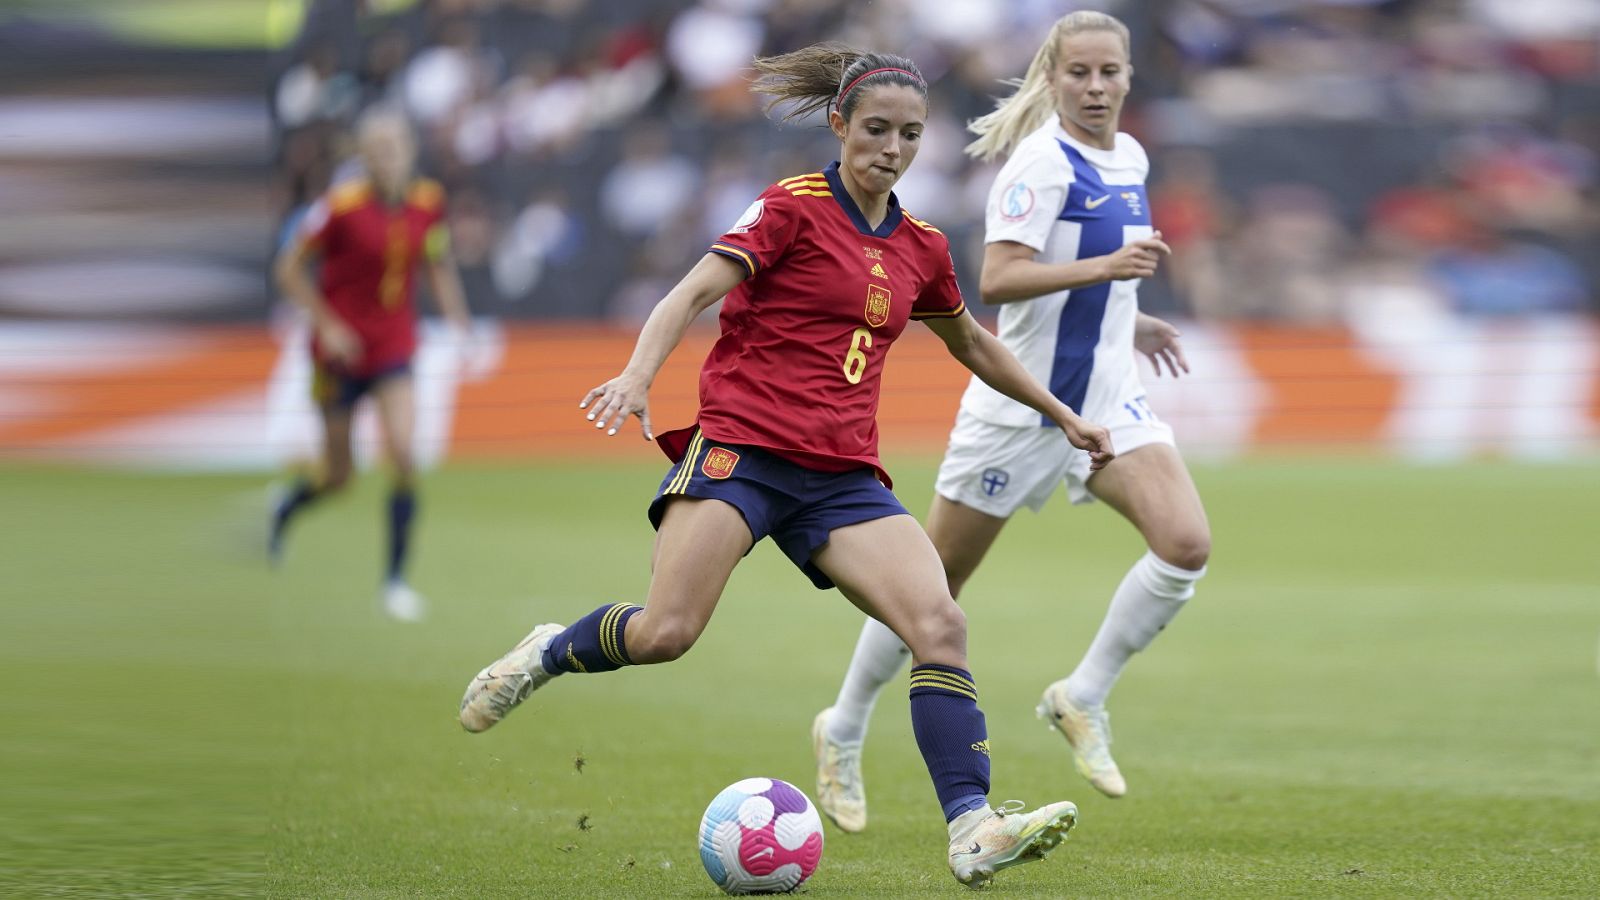 Fútbol - Campeonato de Europa femenino: España - Finlandia - ver ahora